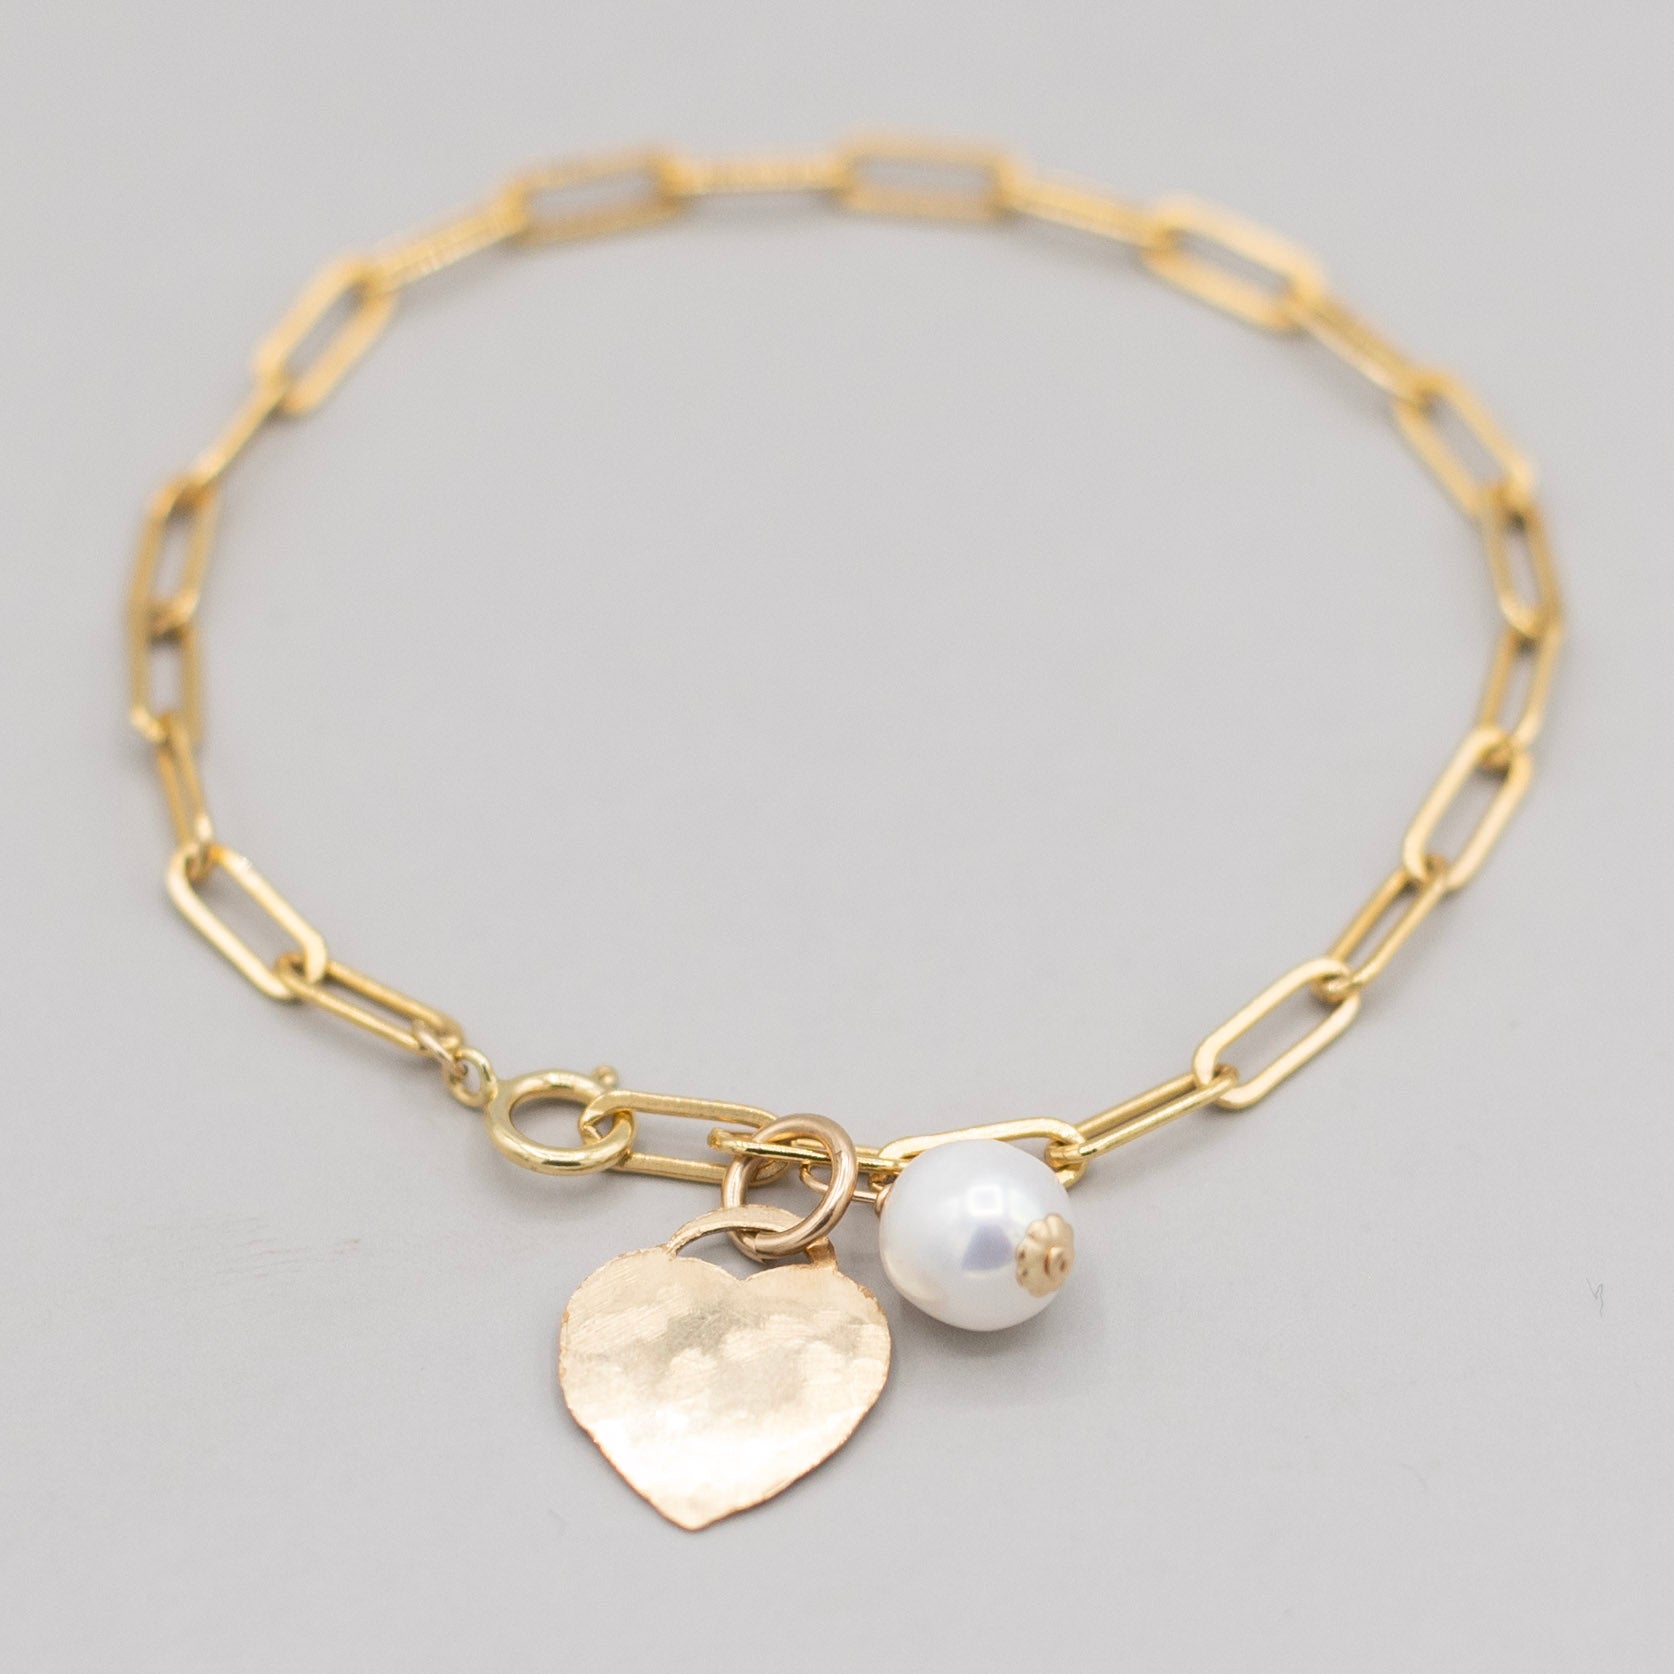 14k Gold Filled Paper Clip & Heart Bracelet - Jewel Ya